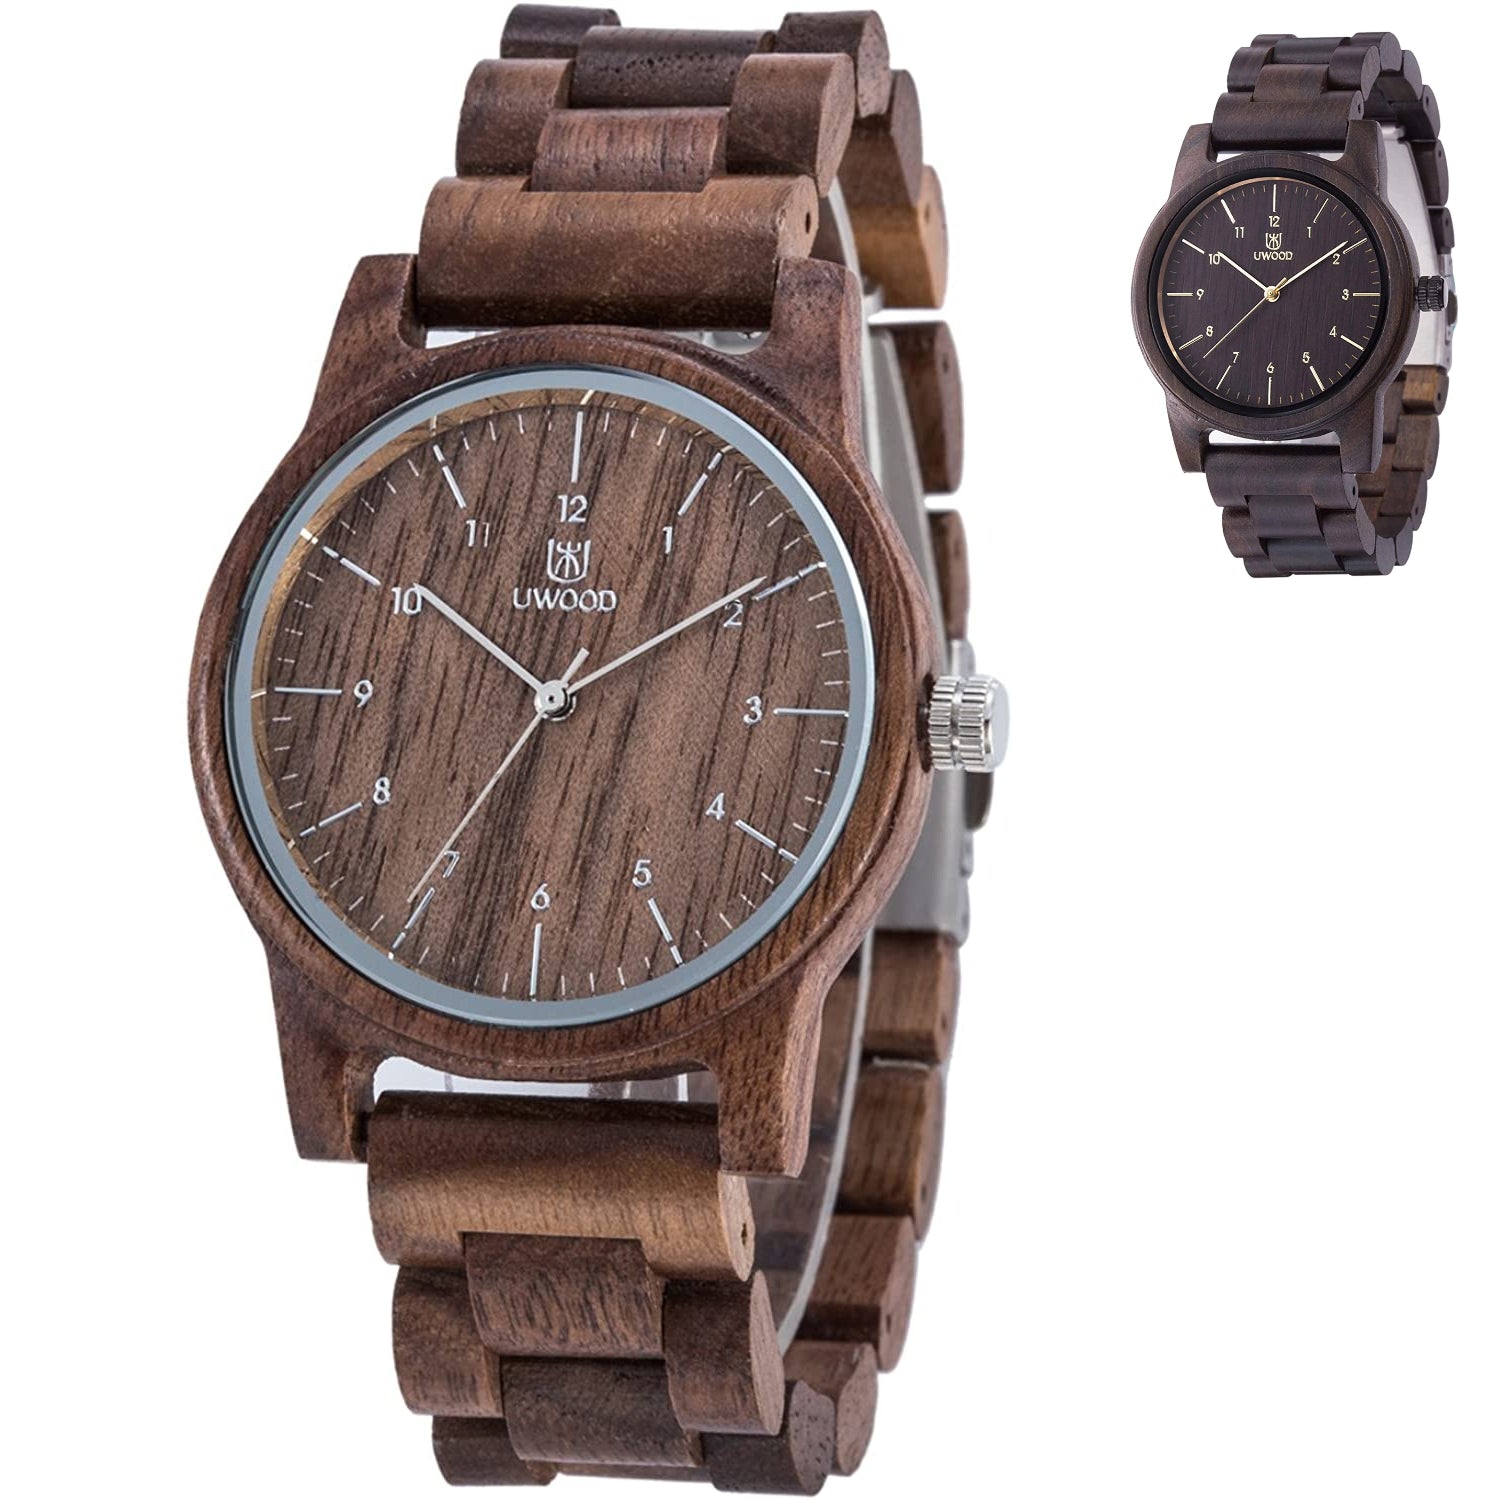 VOWOOD - Premium Wood Watch Brand